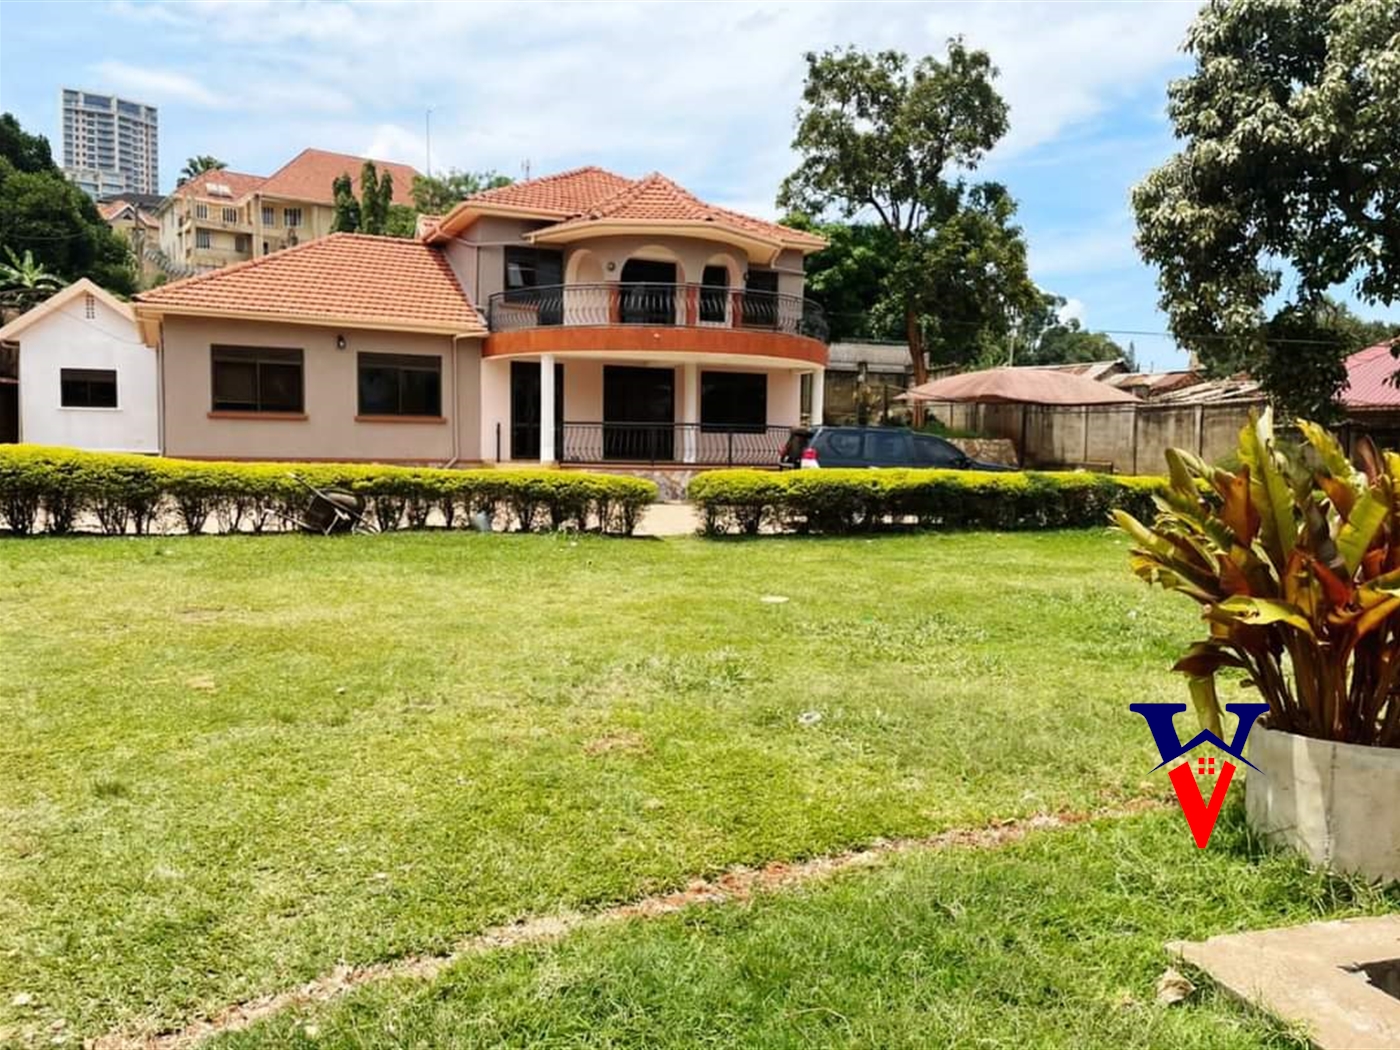 9 Bedroom Storeyed House For Rent In Naguru Kampala Uganda Code 10 09 22